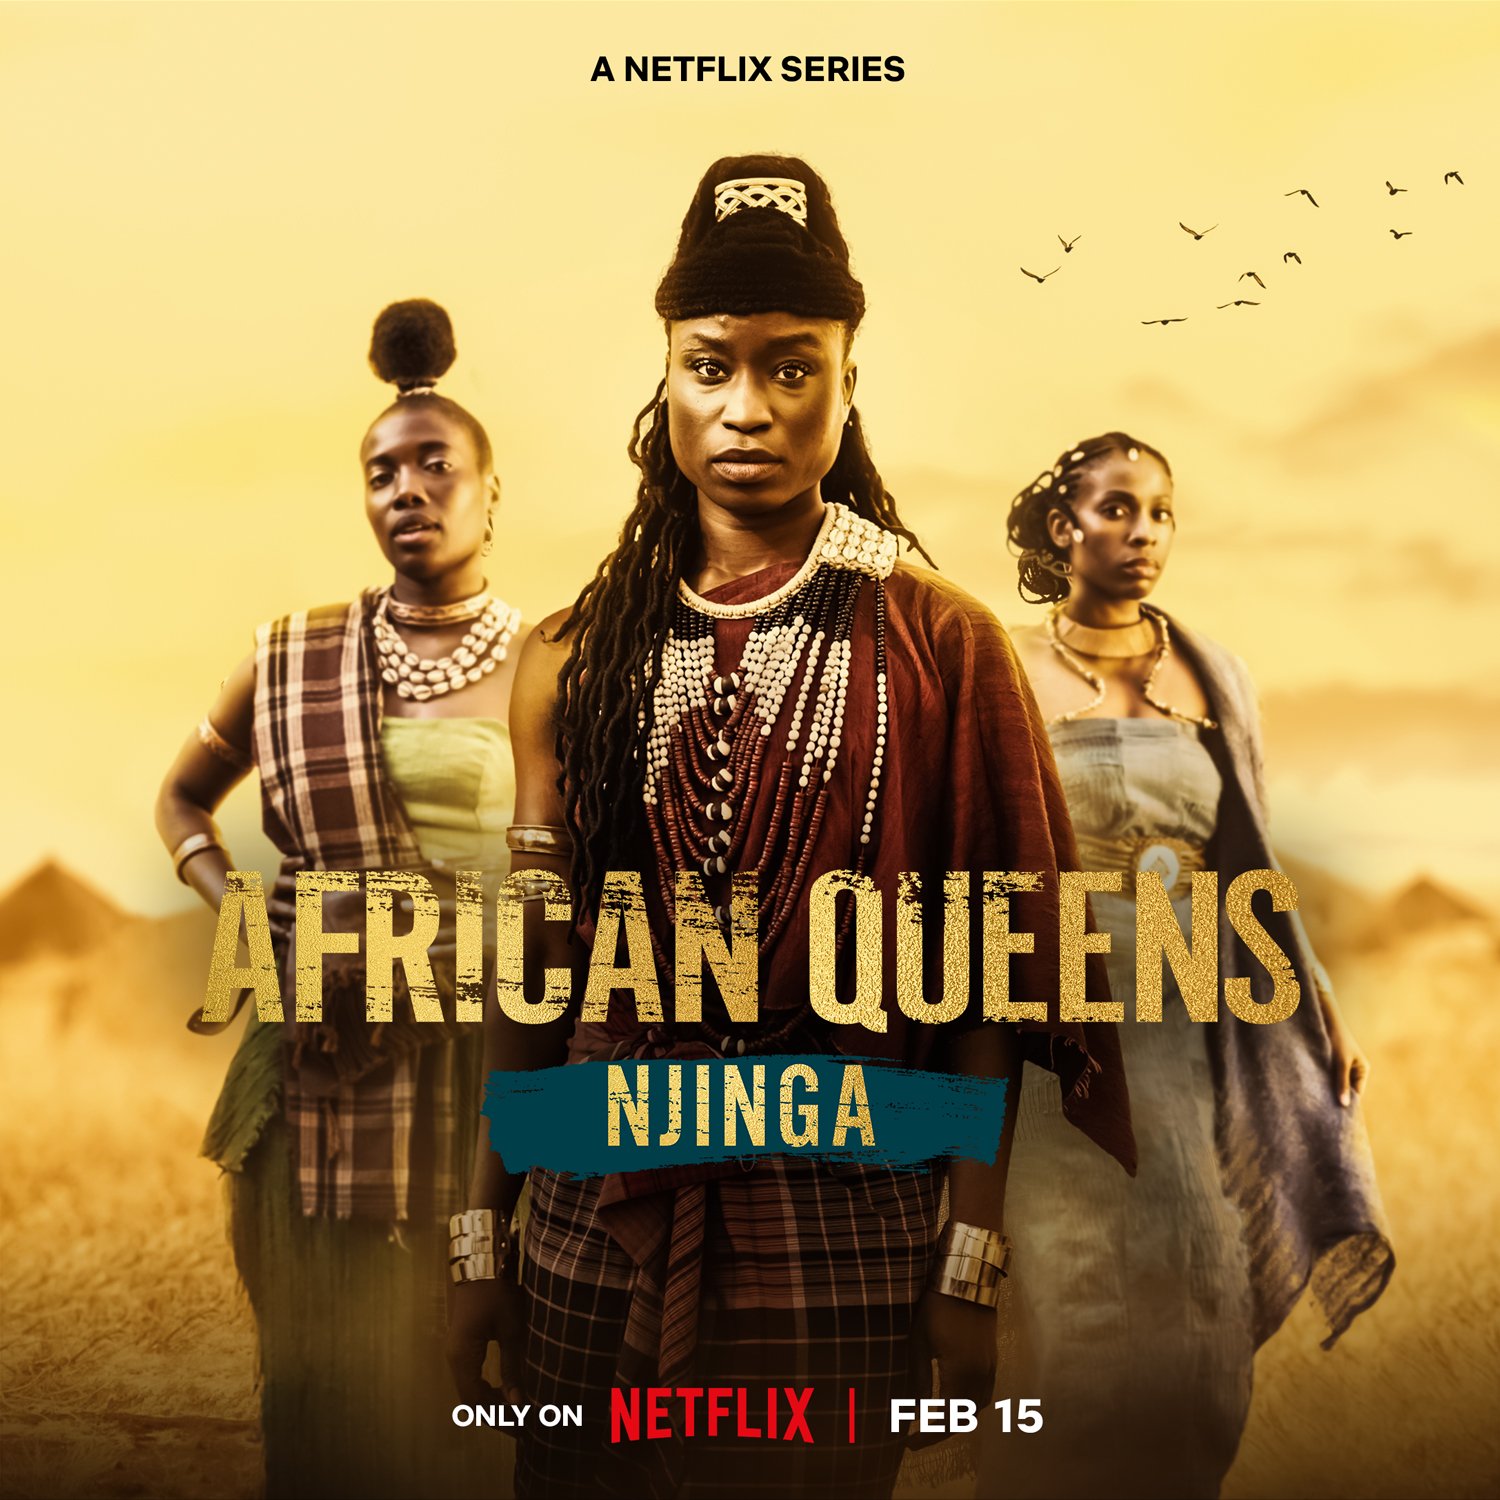 Reines africaines : Njinga